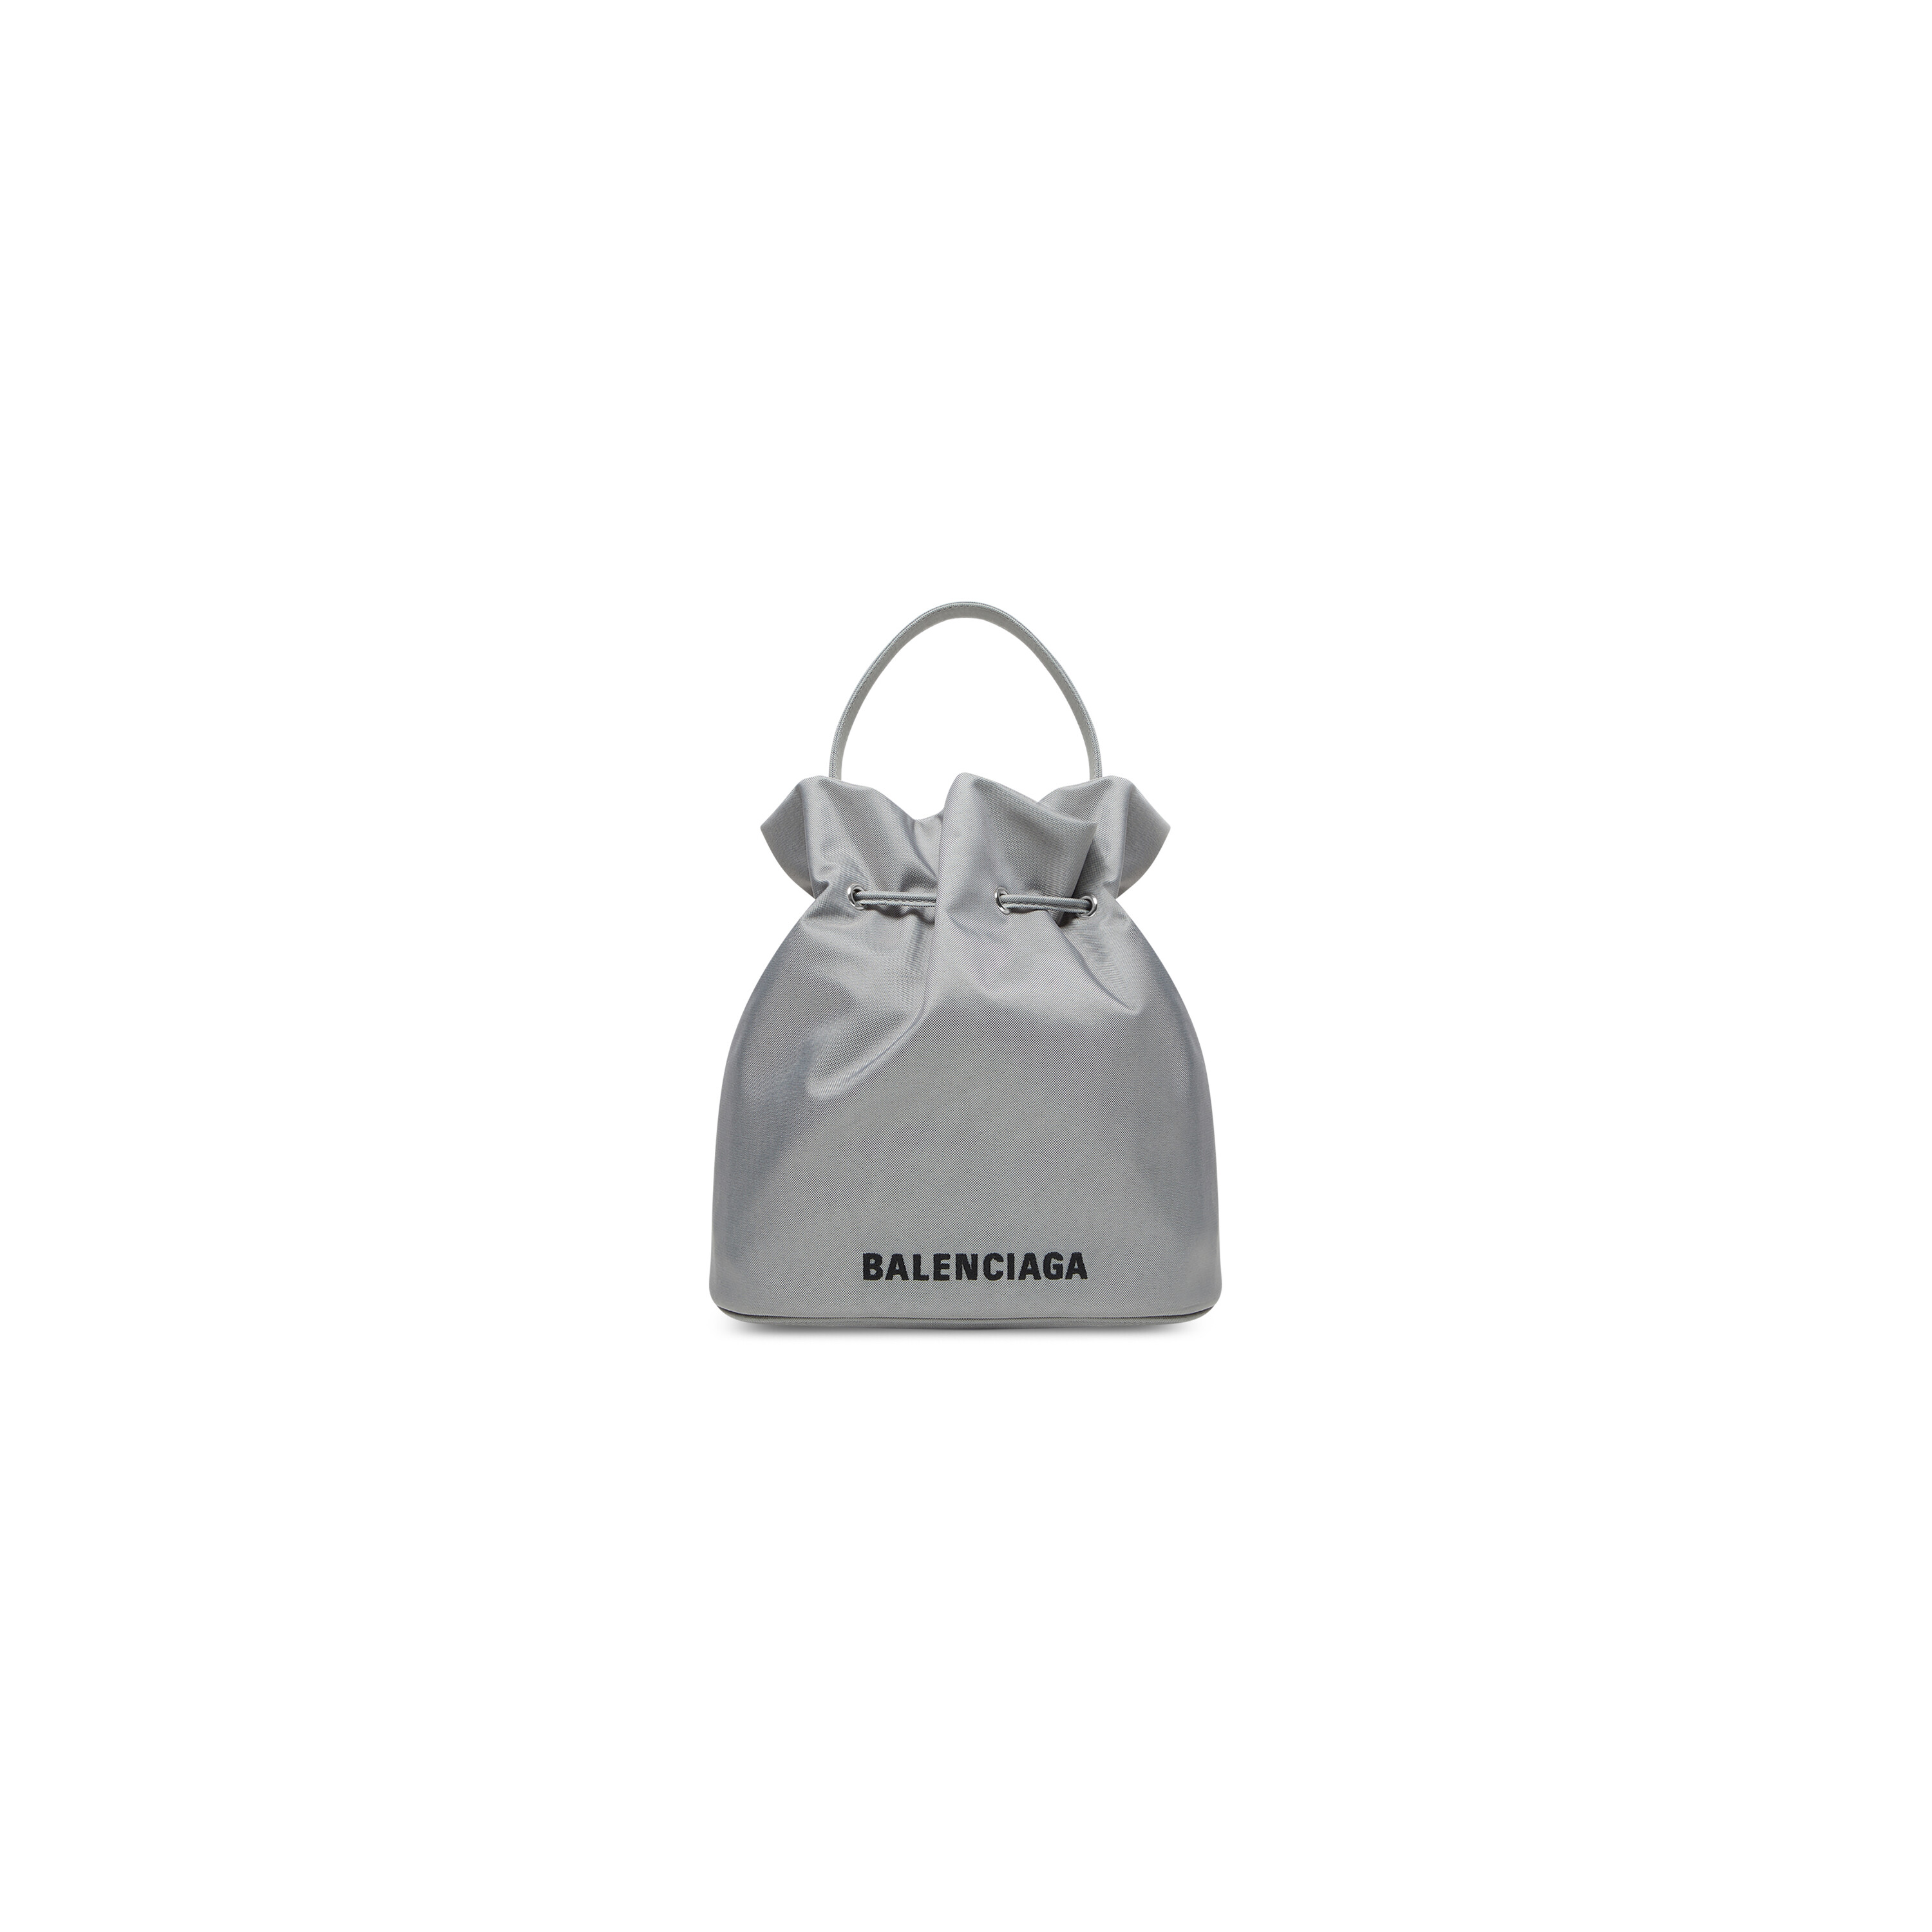 Balenciaga Wheel Sling Bag in Recycled Nylon